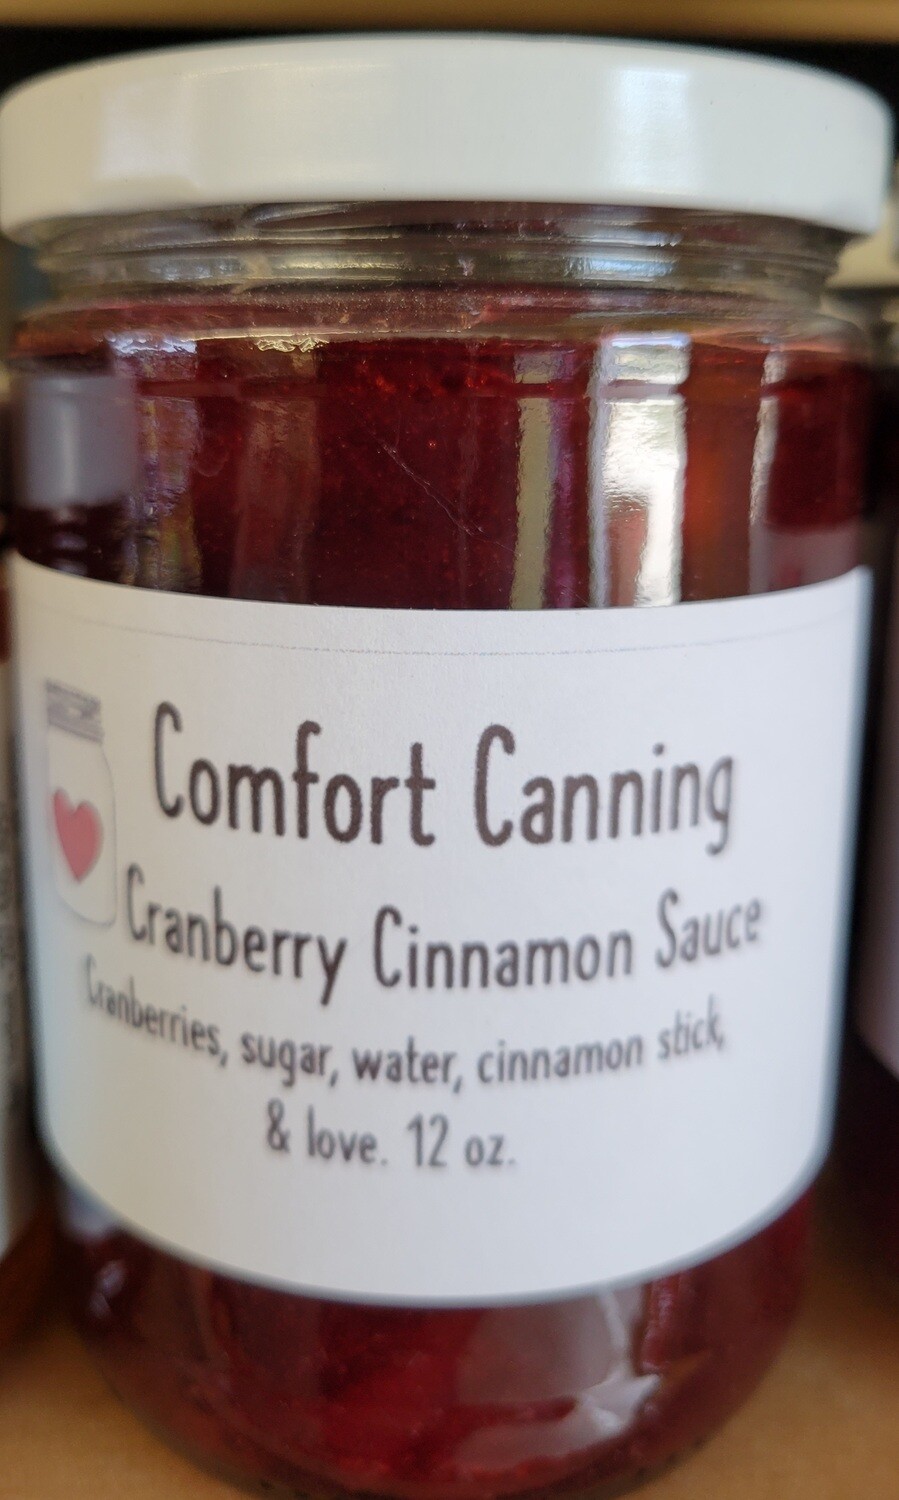 Comfort Canning - Cranberry Cinnamon Sauce